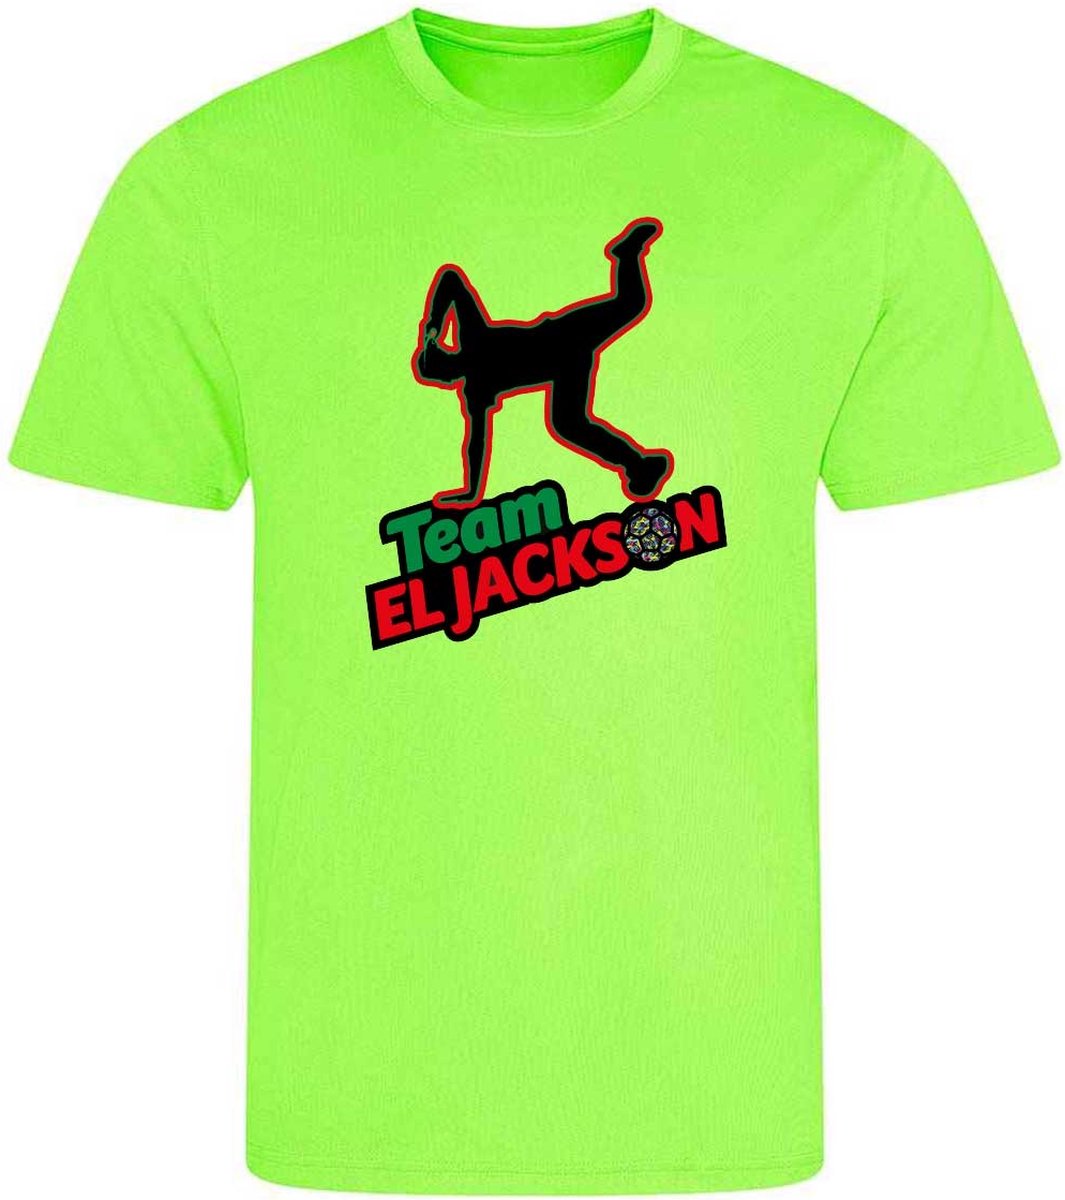 El Jackson T-Shirt - PISTACHE GREEN - (164-XXL) - VOETBALSHIRT - SPORTSHIRT